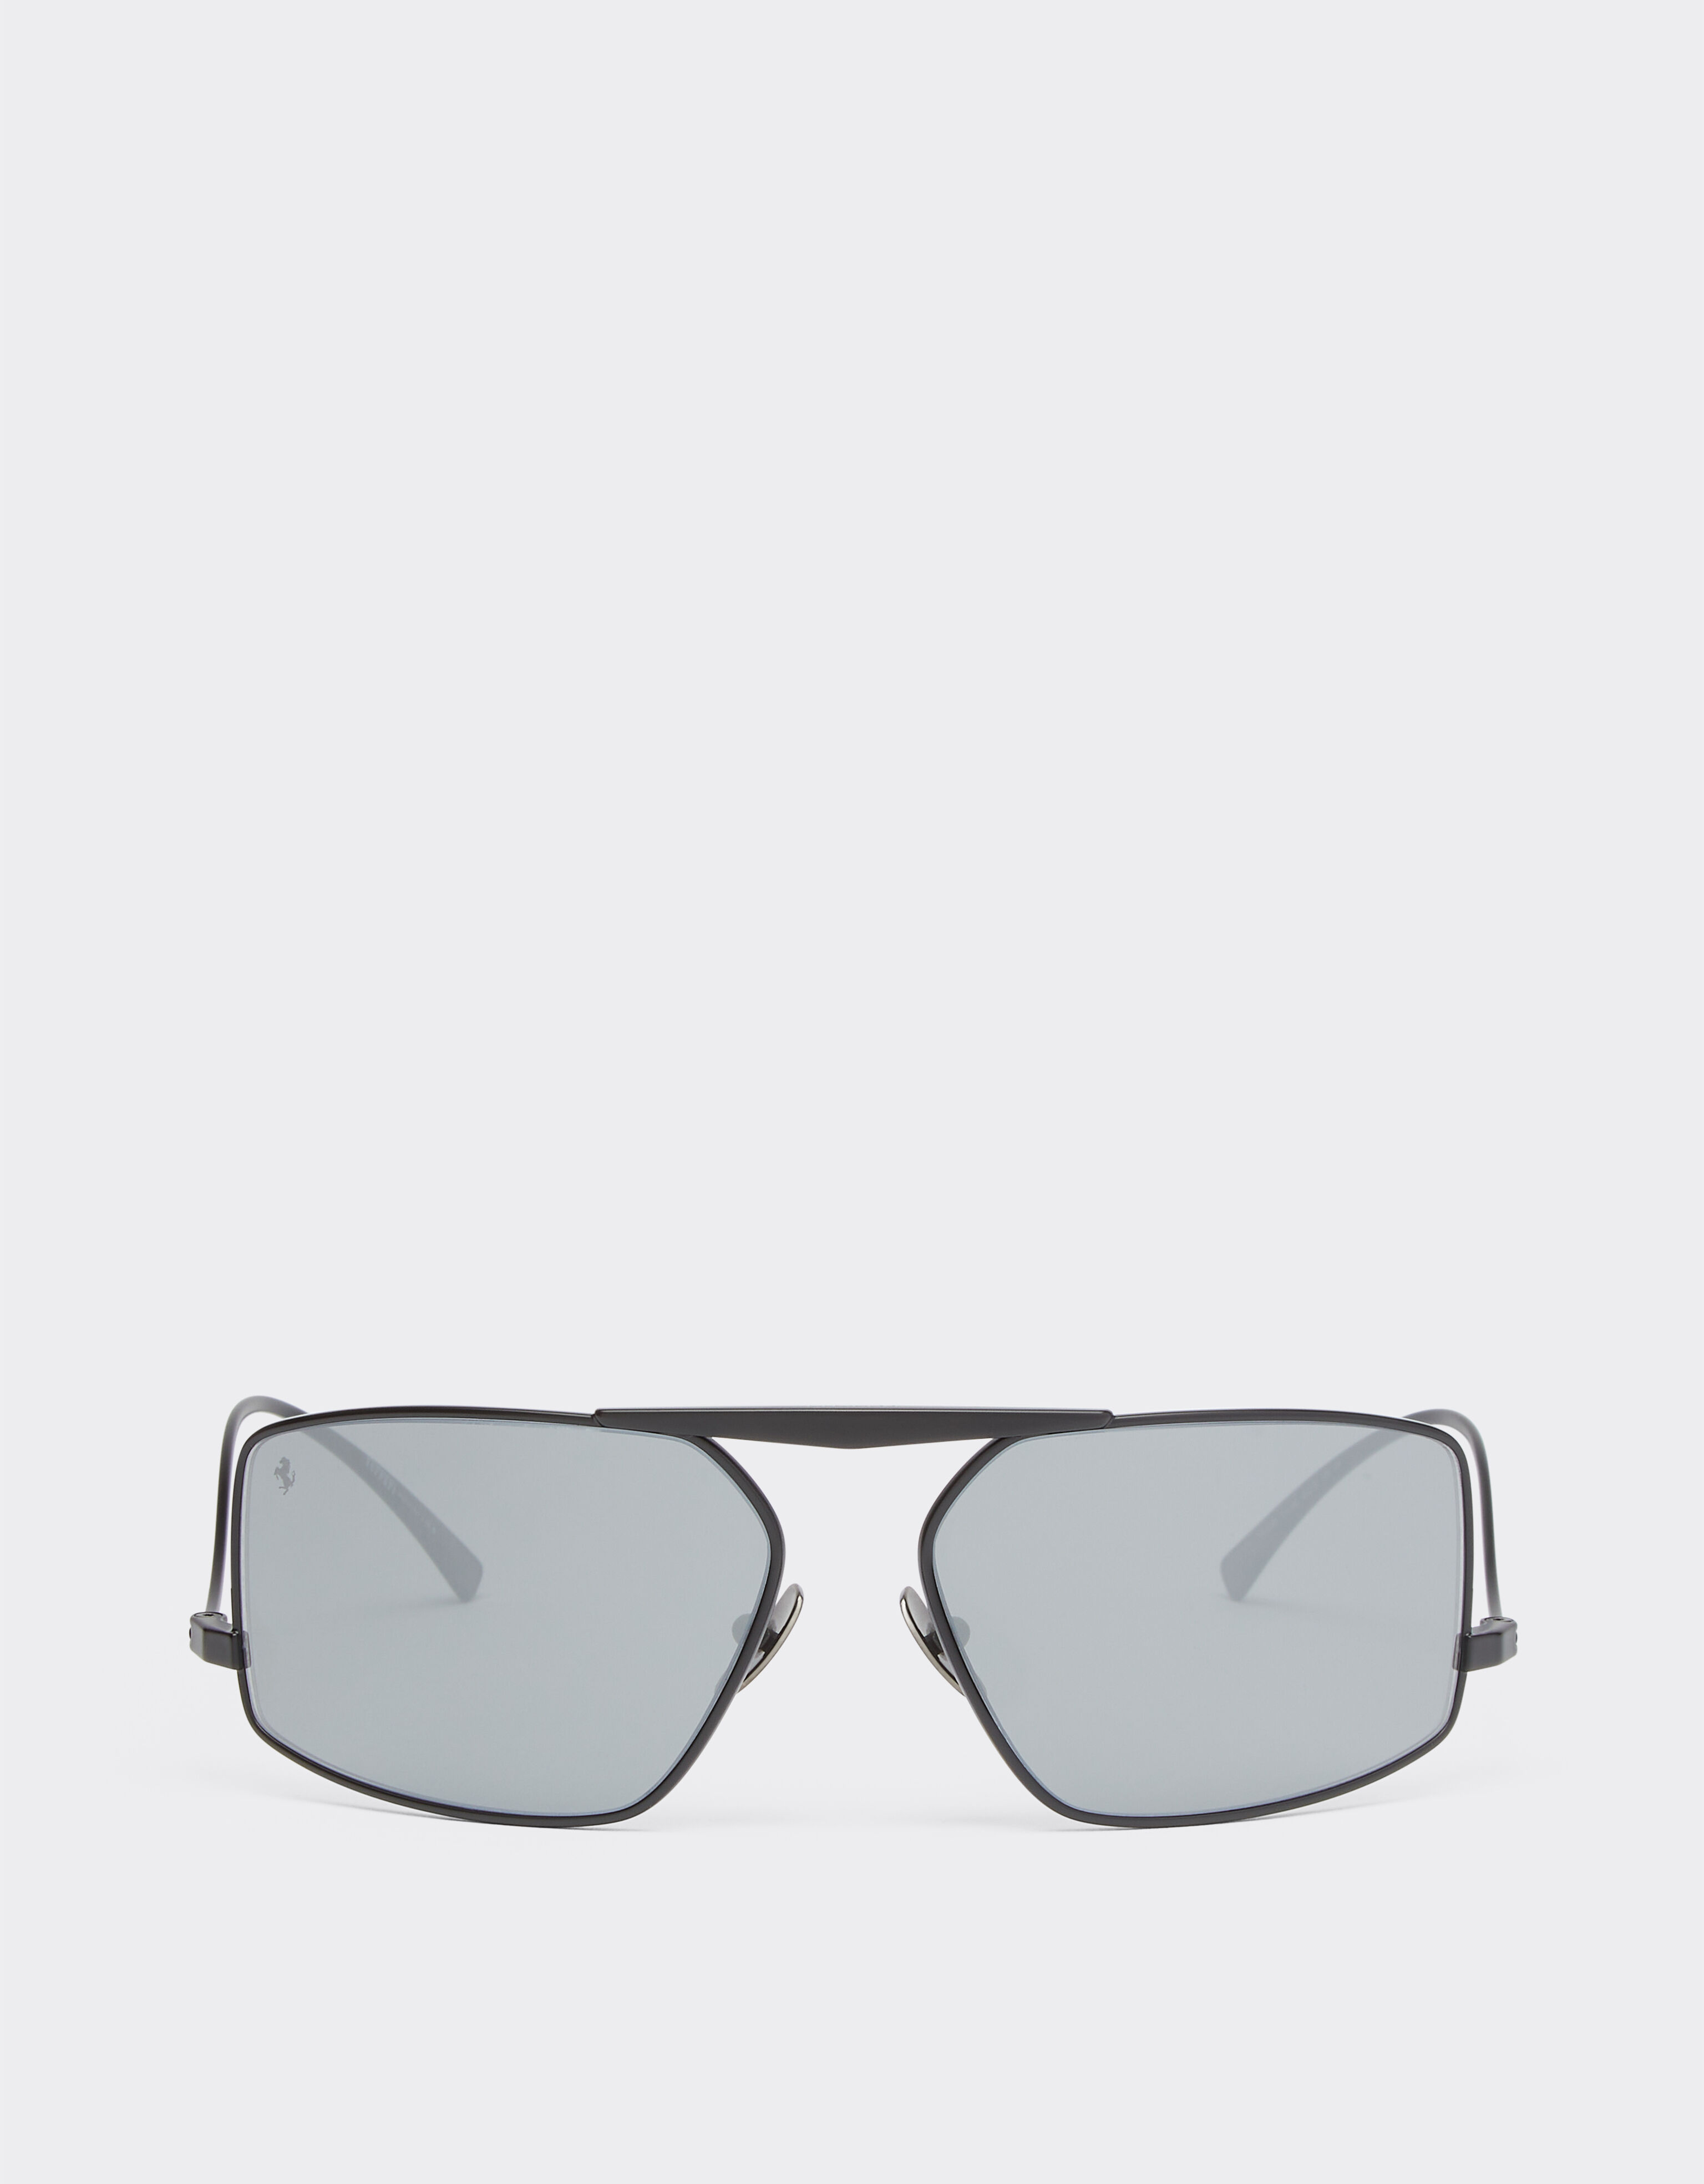 Ferrari Ferrari sunglasses in black metal with silver mirror lenses Black Matt F1250f